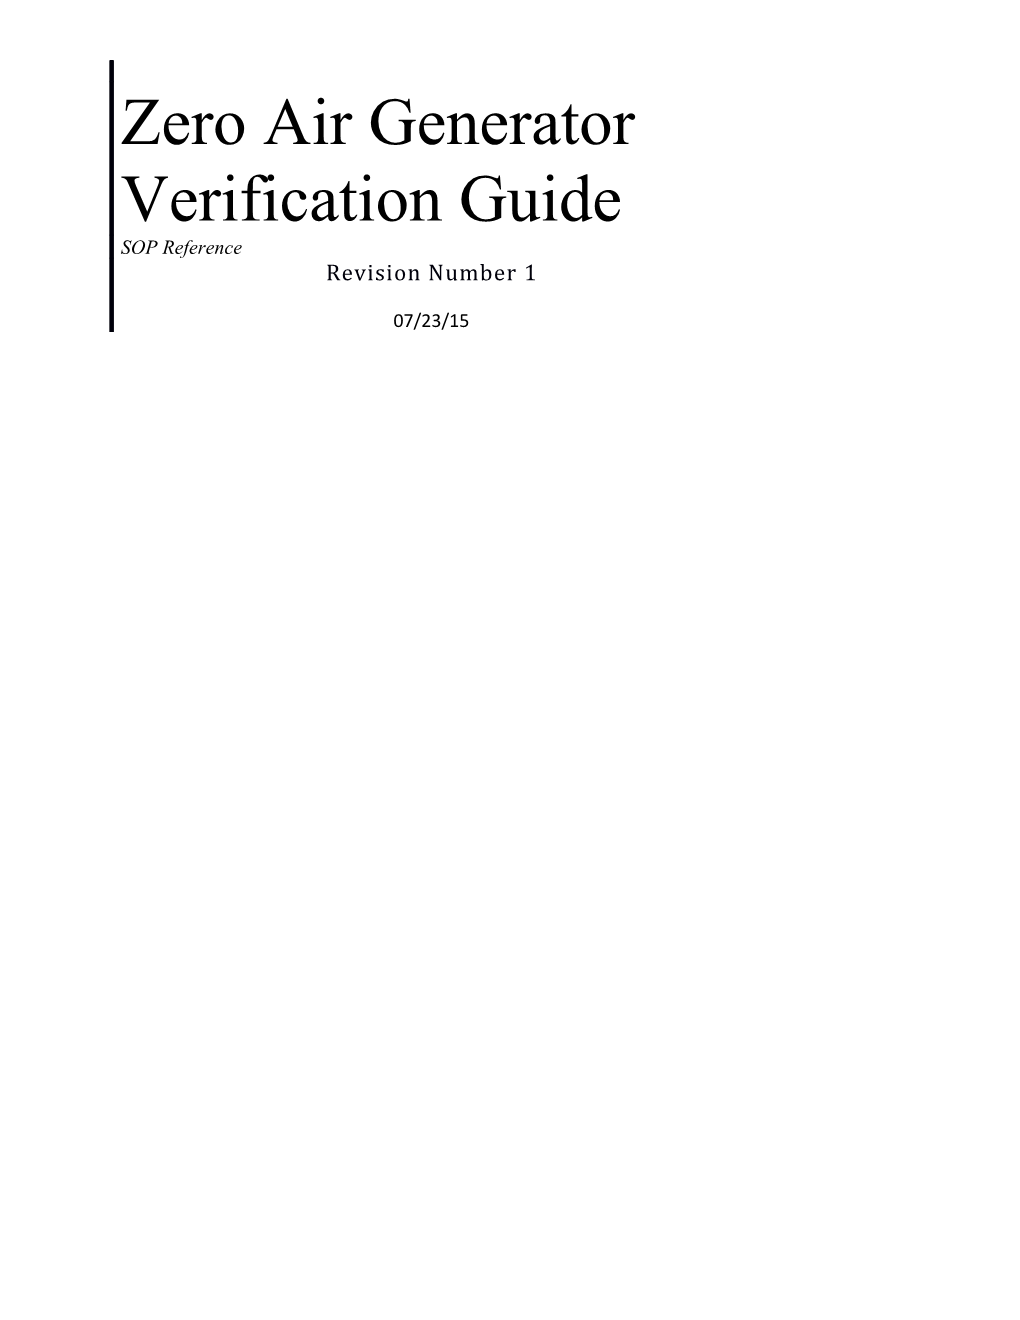 Zero Air Generator Verification Guide